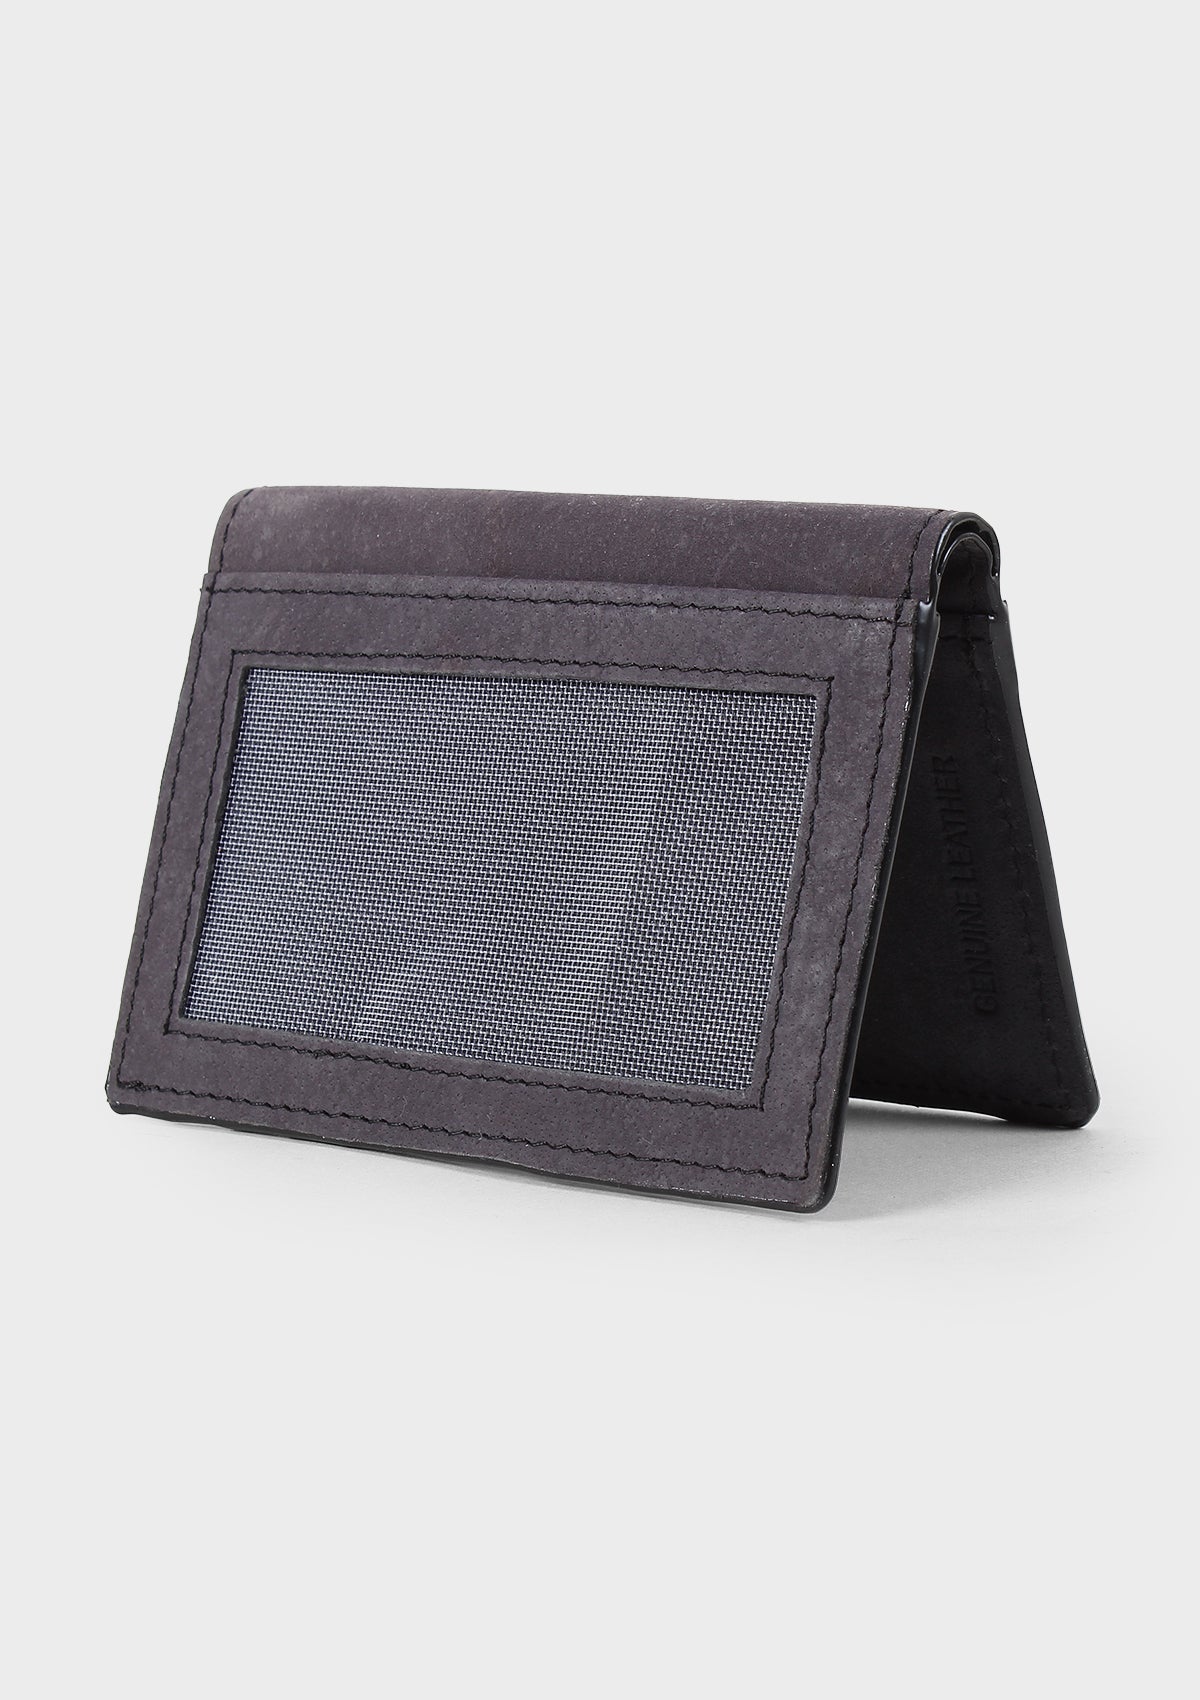 Black Colour Bi-Fold Italian Leather Slim Wallet/Card Holder (9 Card Slot + 3 Hidden Compartment + 1 ID Slot + Cash Compartment)